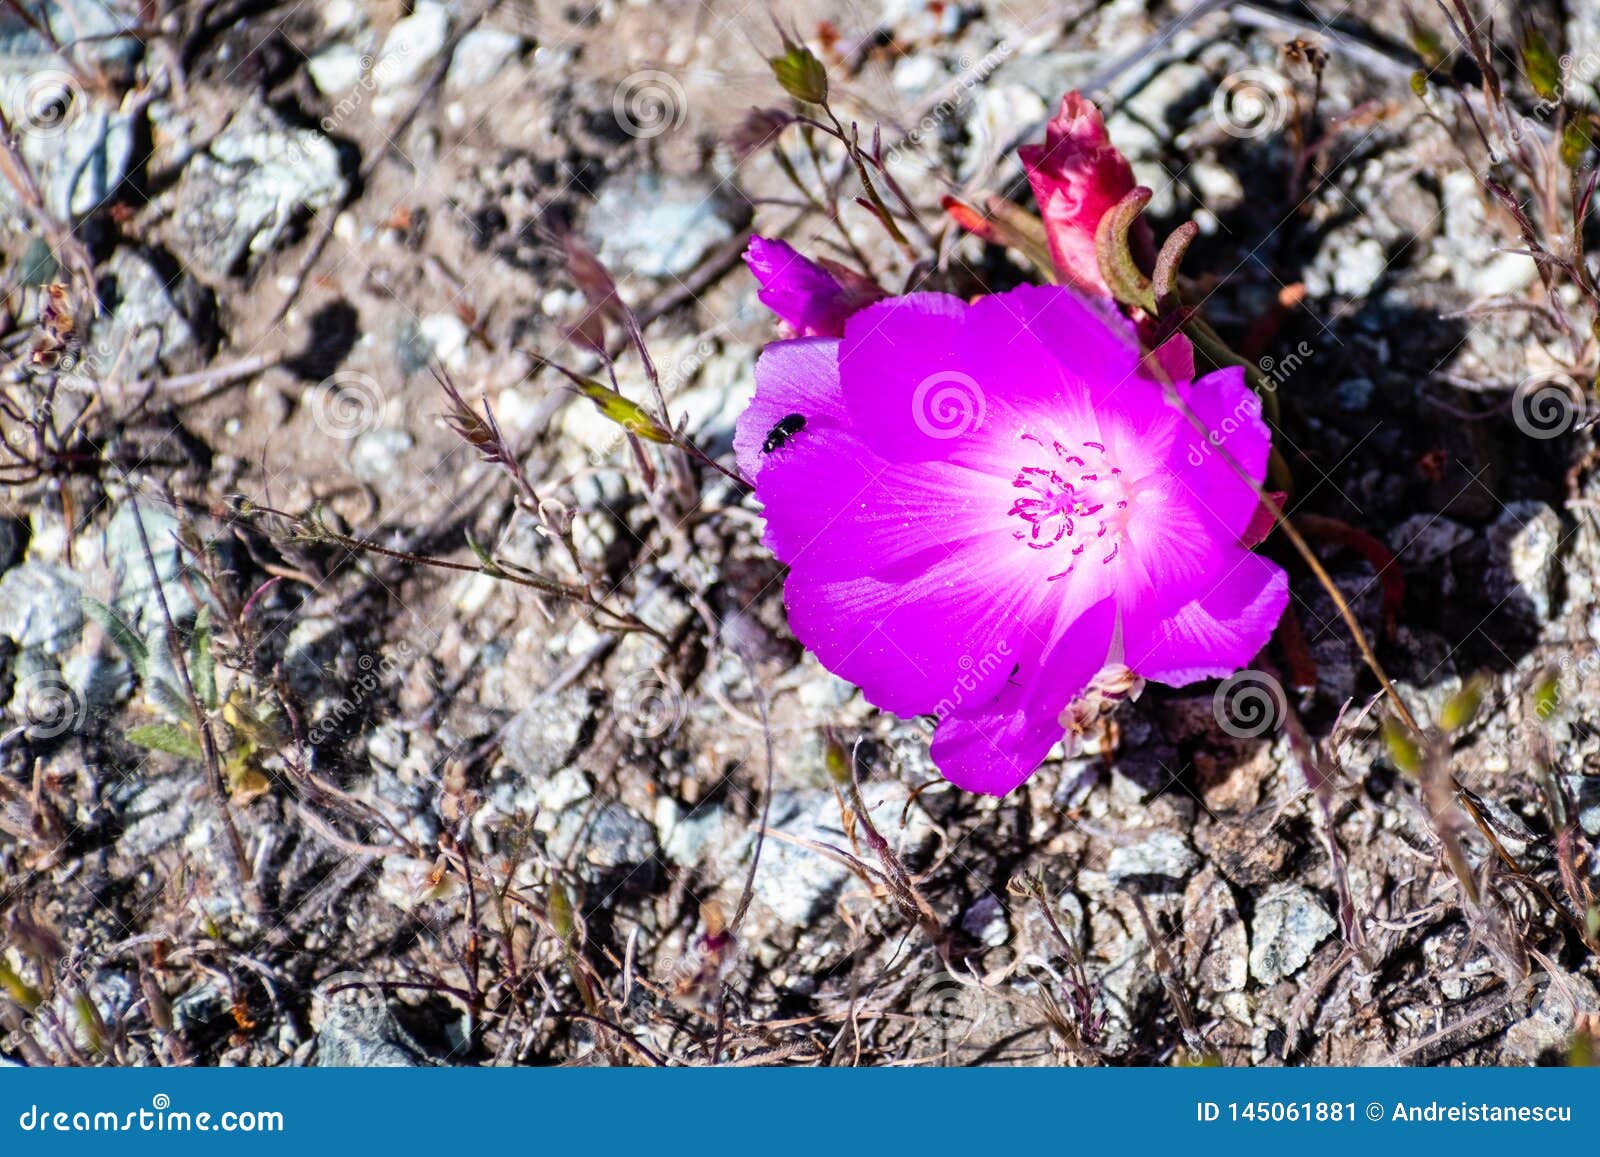 bitterroot lewisia rediviva, the state flower of montana; blooming in spring in santa cruz mountains, south san francisco bay